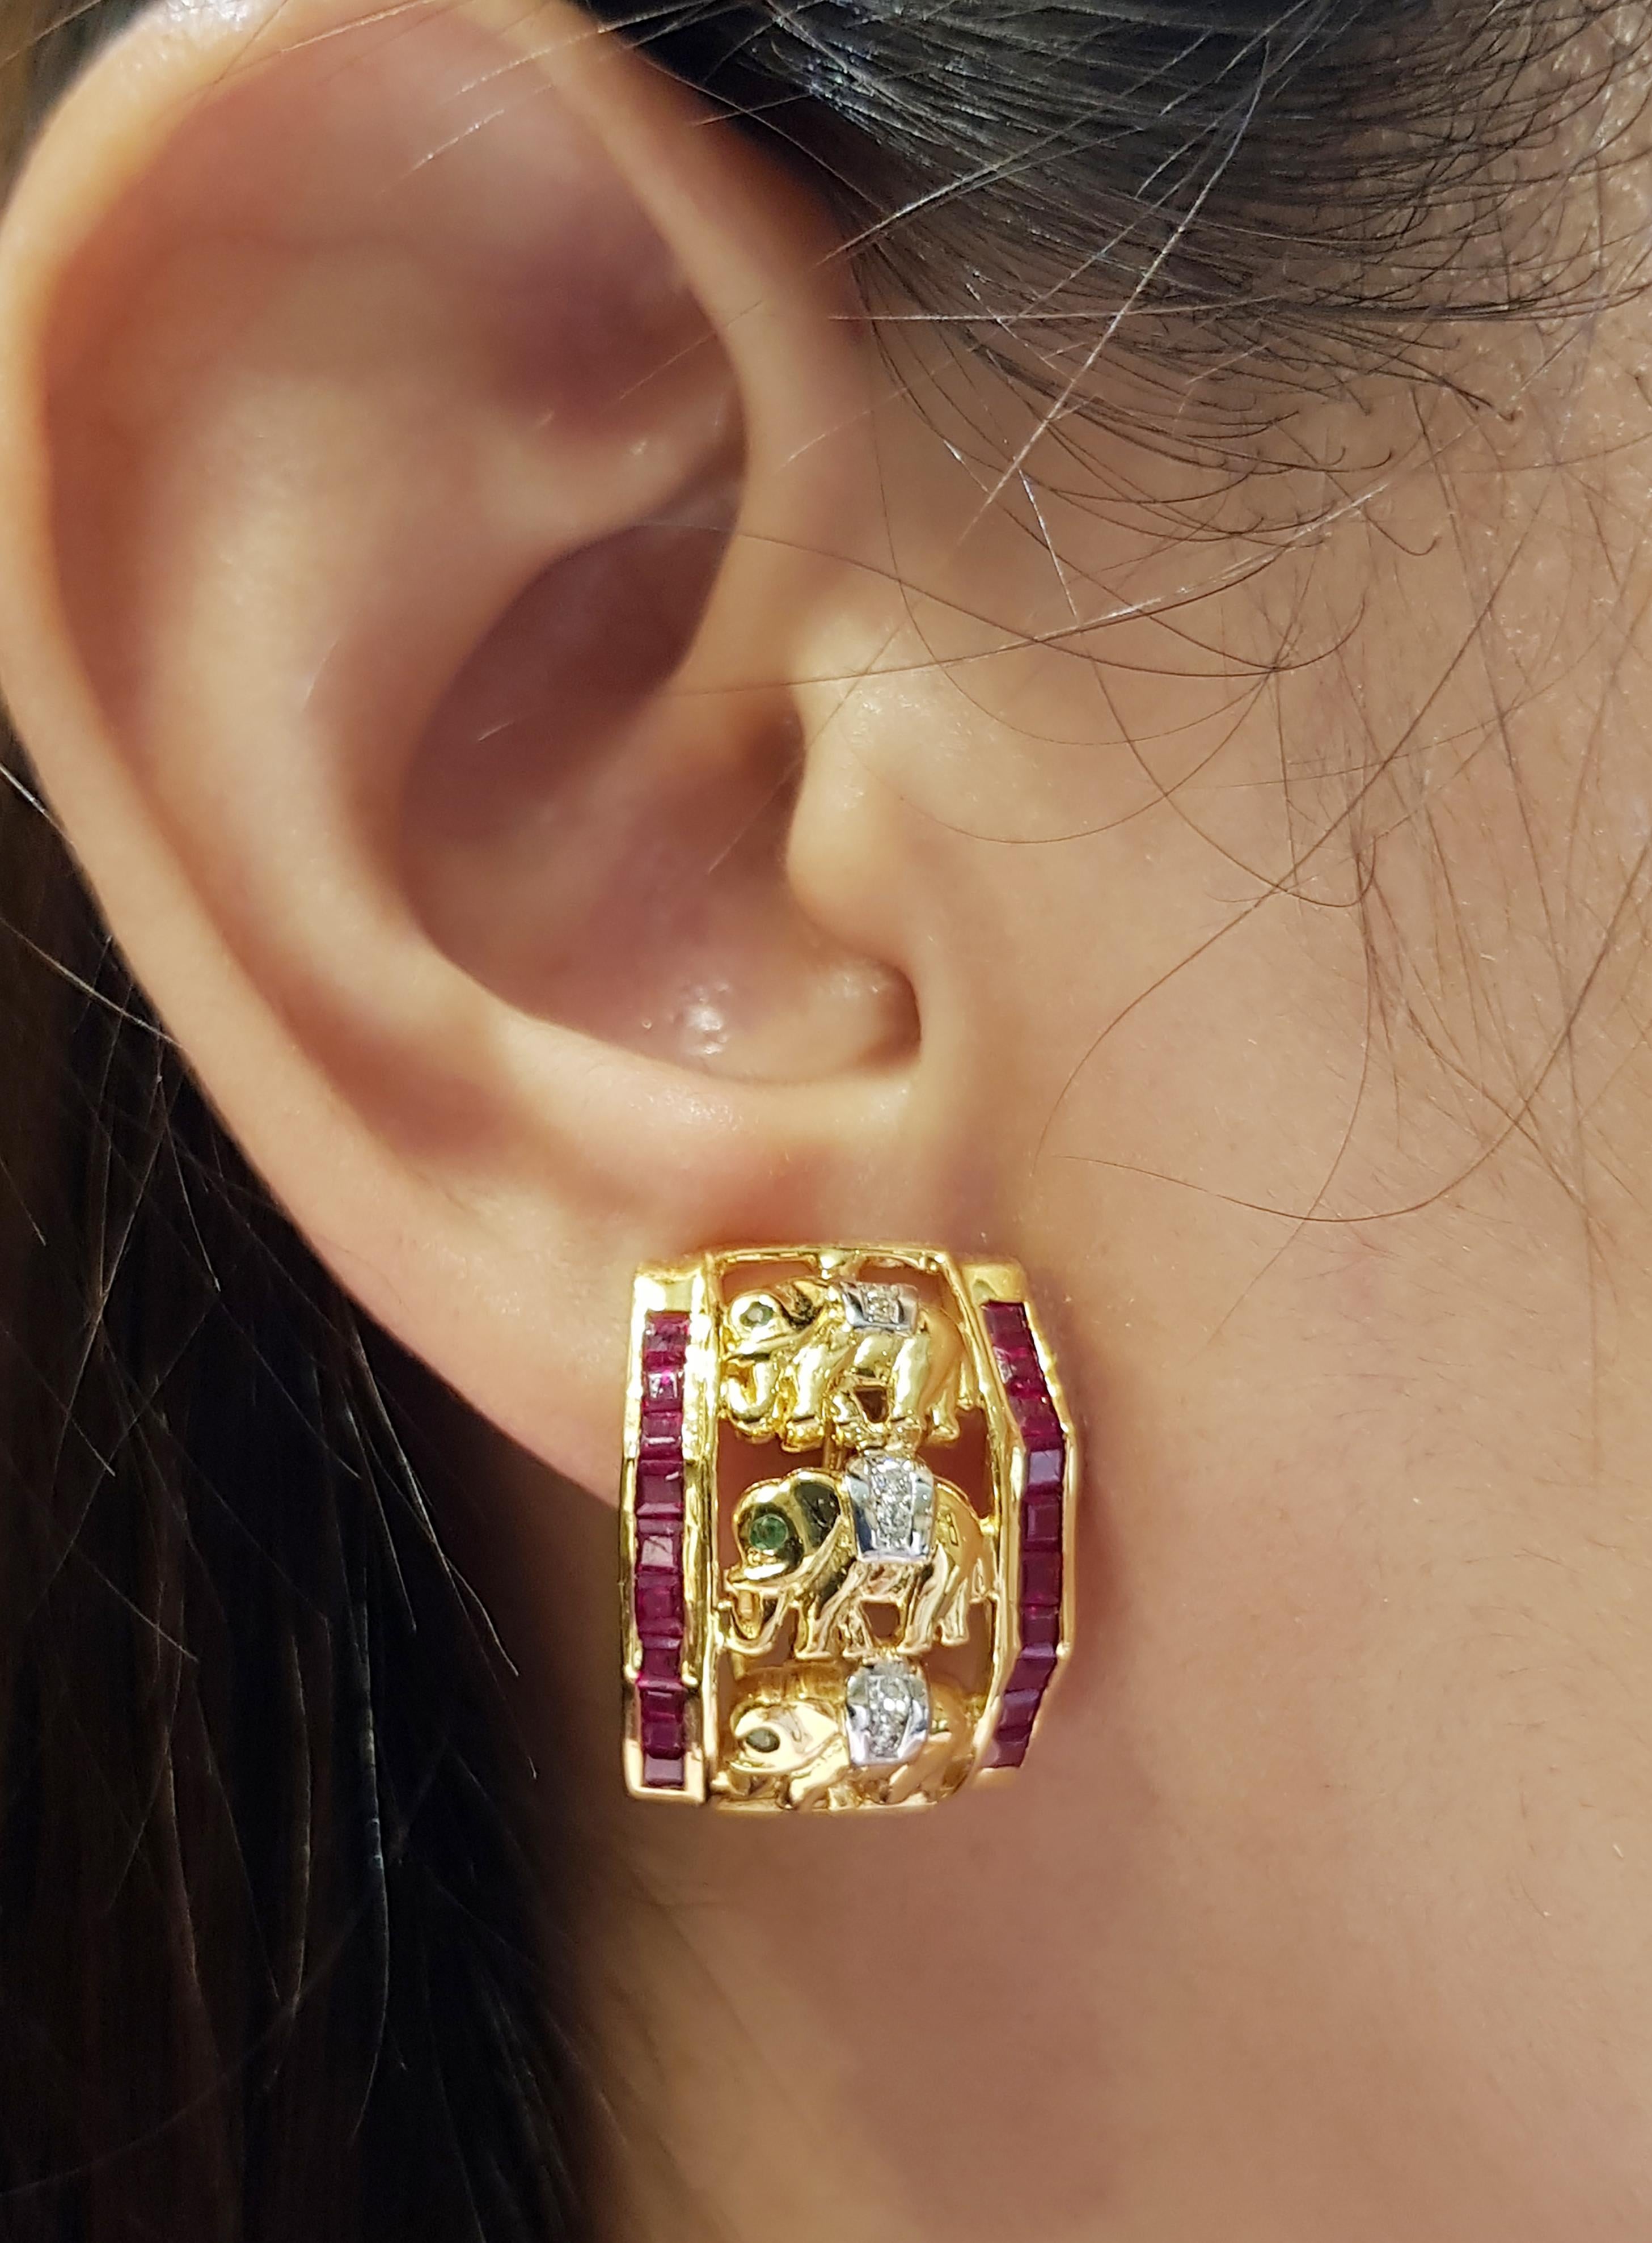 Ruby 2.66 carats with Tsavorite 0.12 carat and Diamond 0.21 carat Elephant Earrings set in 18 Karat Gold Settings

Width:  1.6 cm 
Length: 2.2 cm
Total Weight: 17.25 grams

